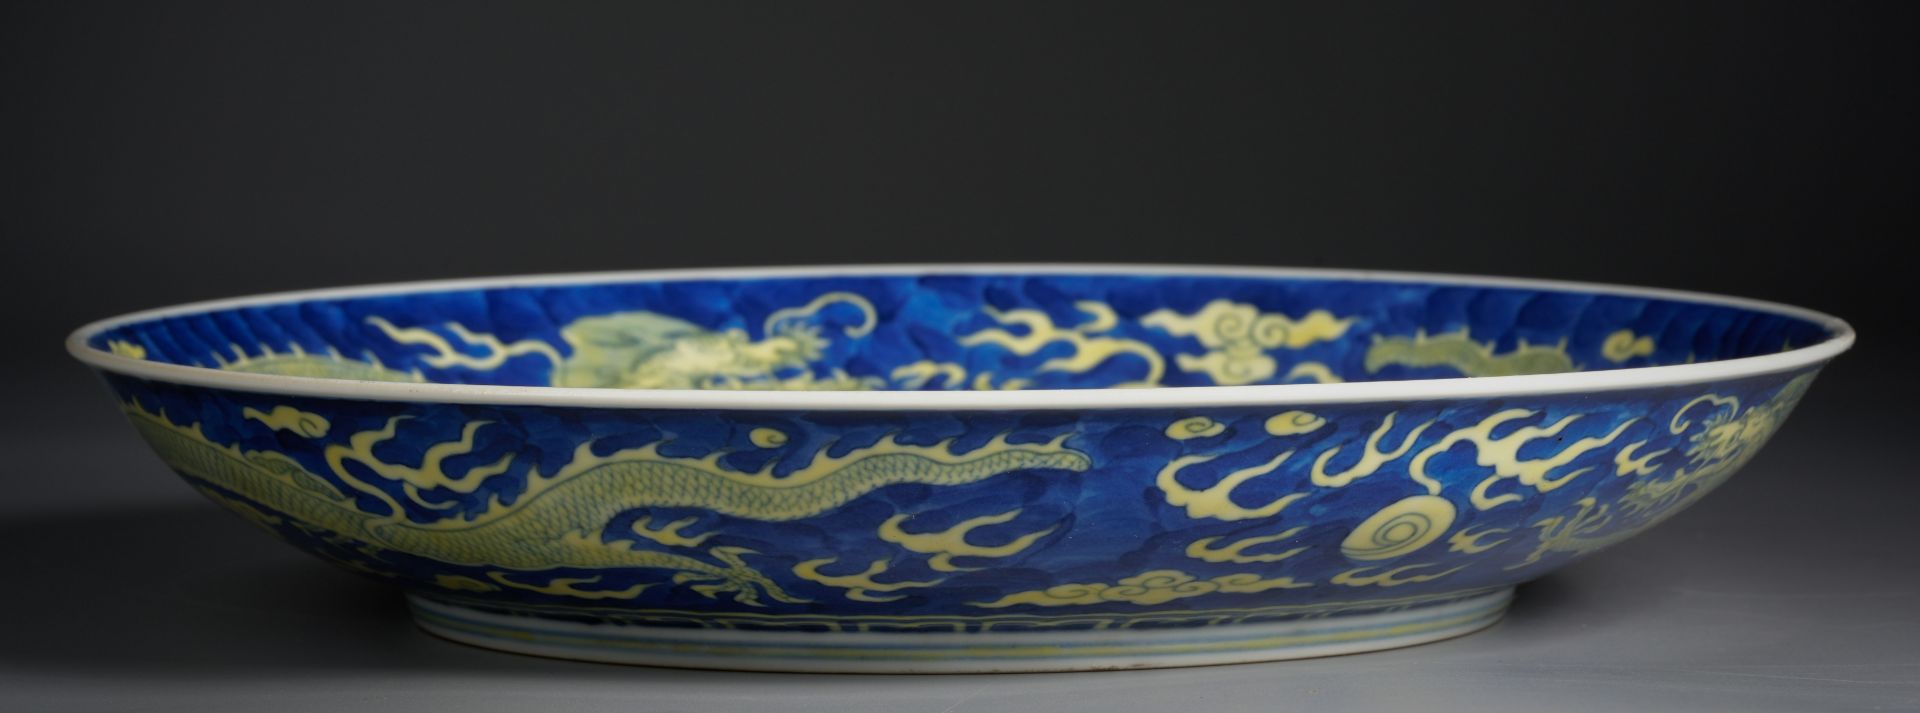 A Chinese Underglaze Blue and Yellow Enameled Dish - Image 8 of 11